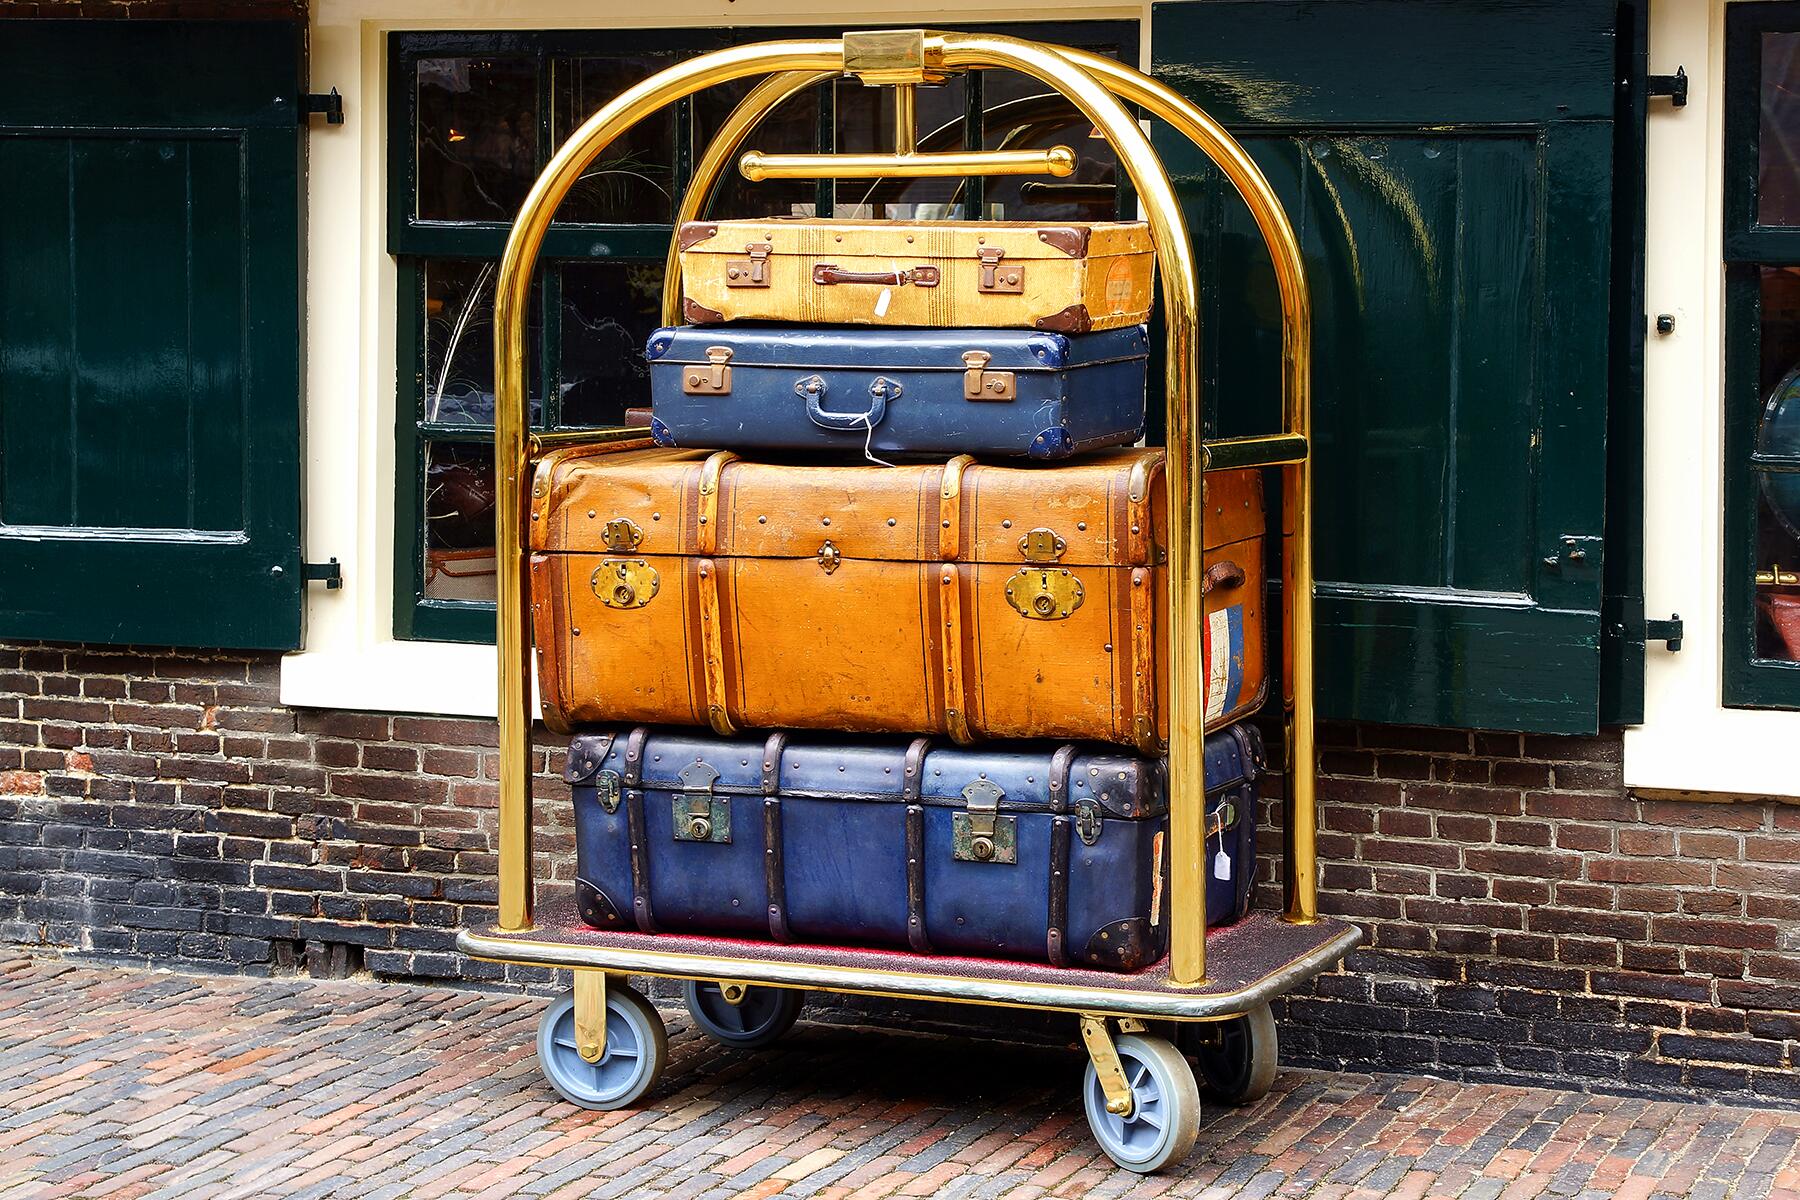 19th century 1800s luggage